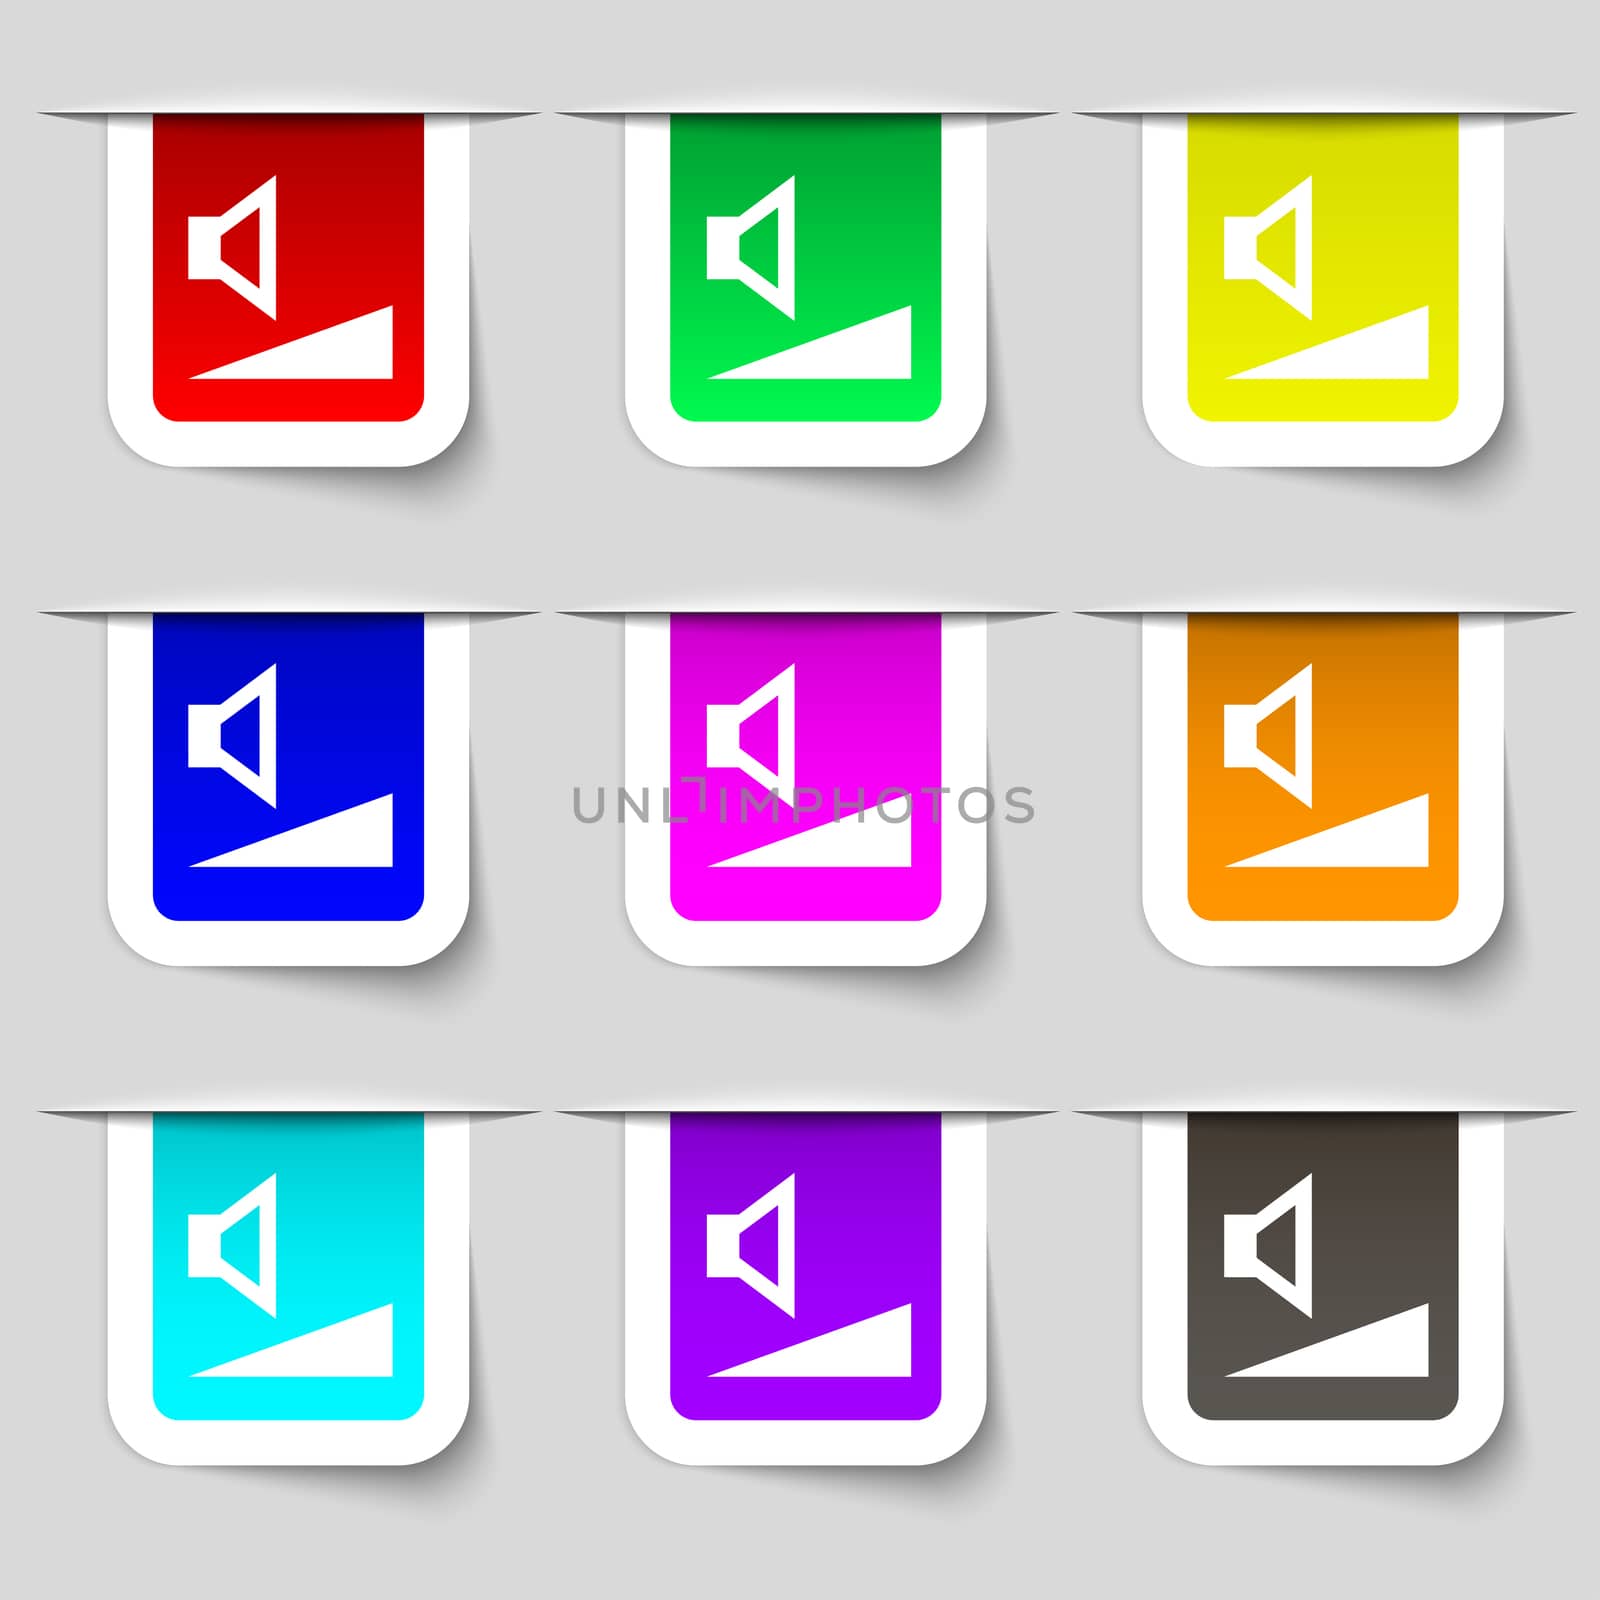 volume, sound icon sign. Set of multicolored modern labels for your design. illustration